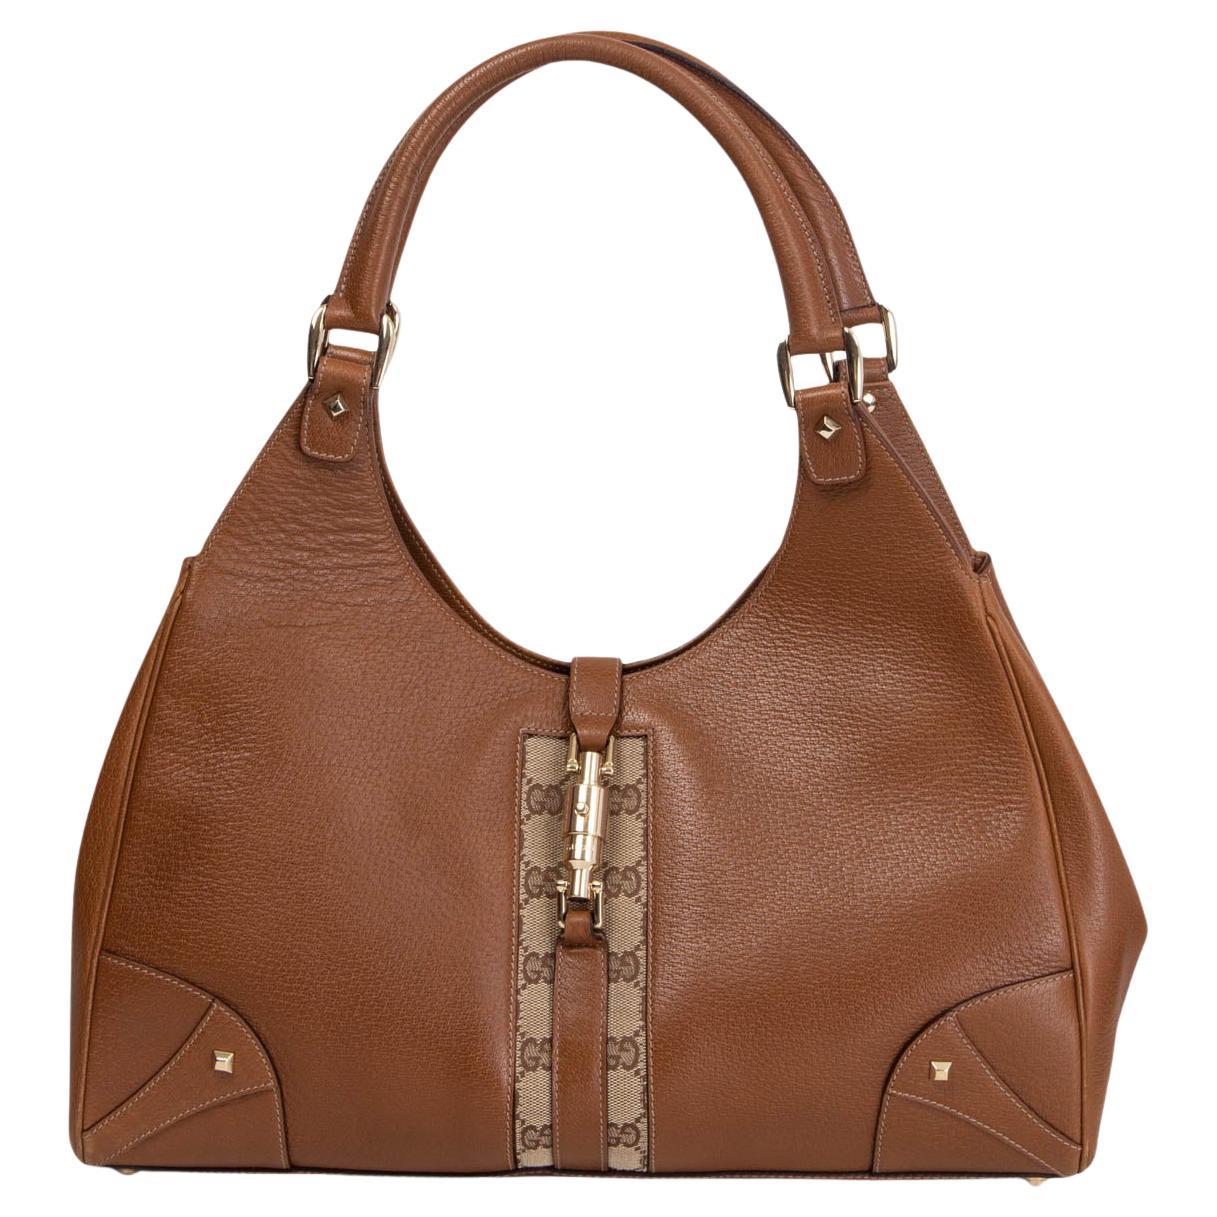 GUCCI brown leather NAILHEAD JACKIE HOBO Shoulder Bag